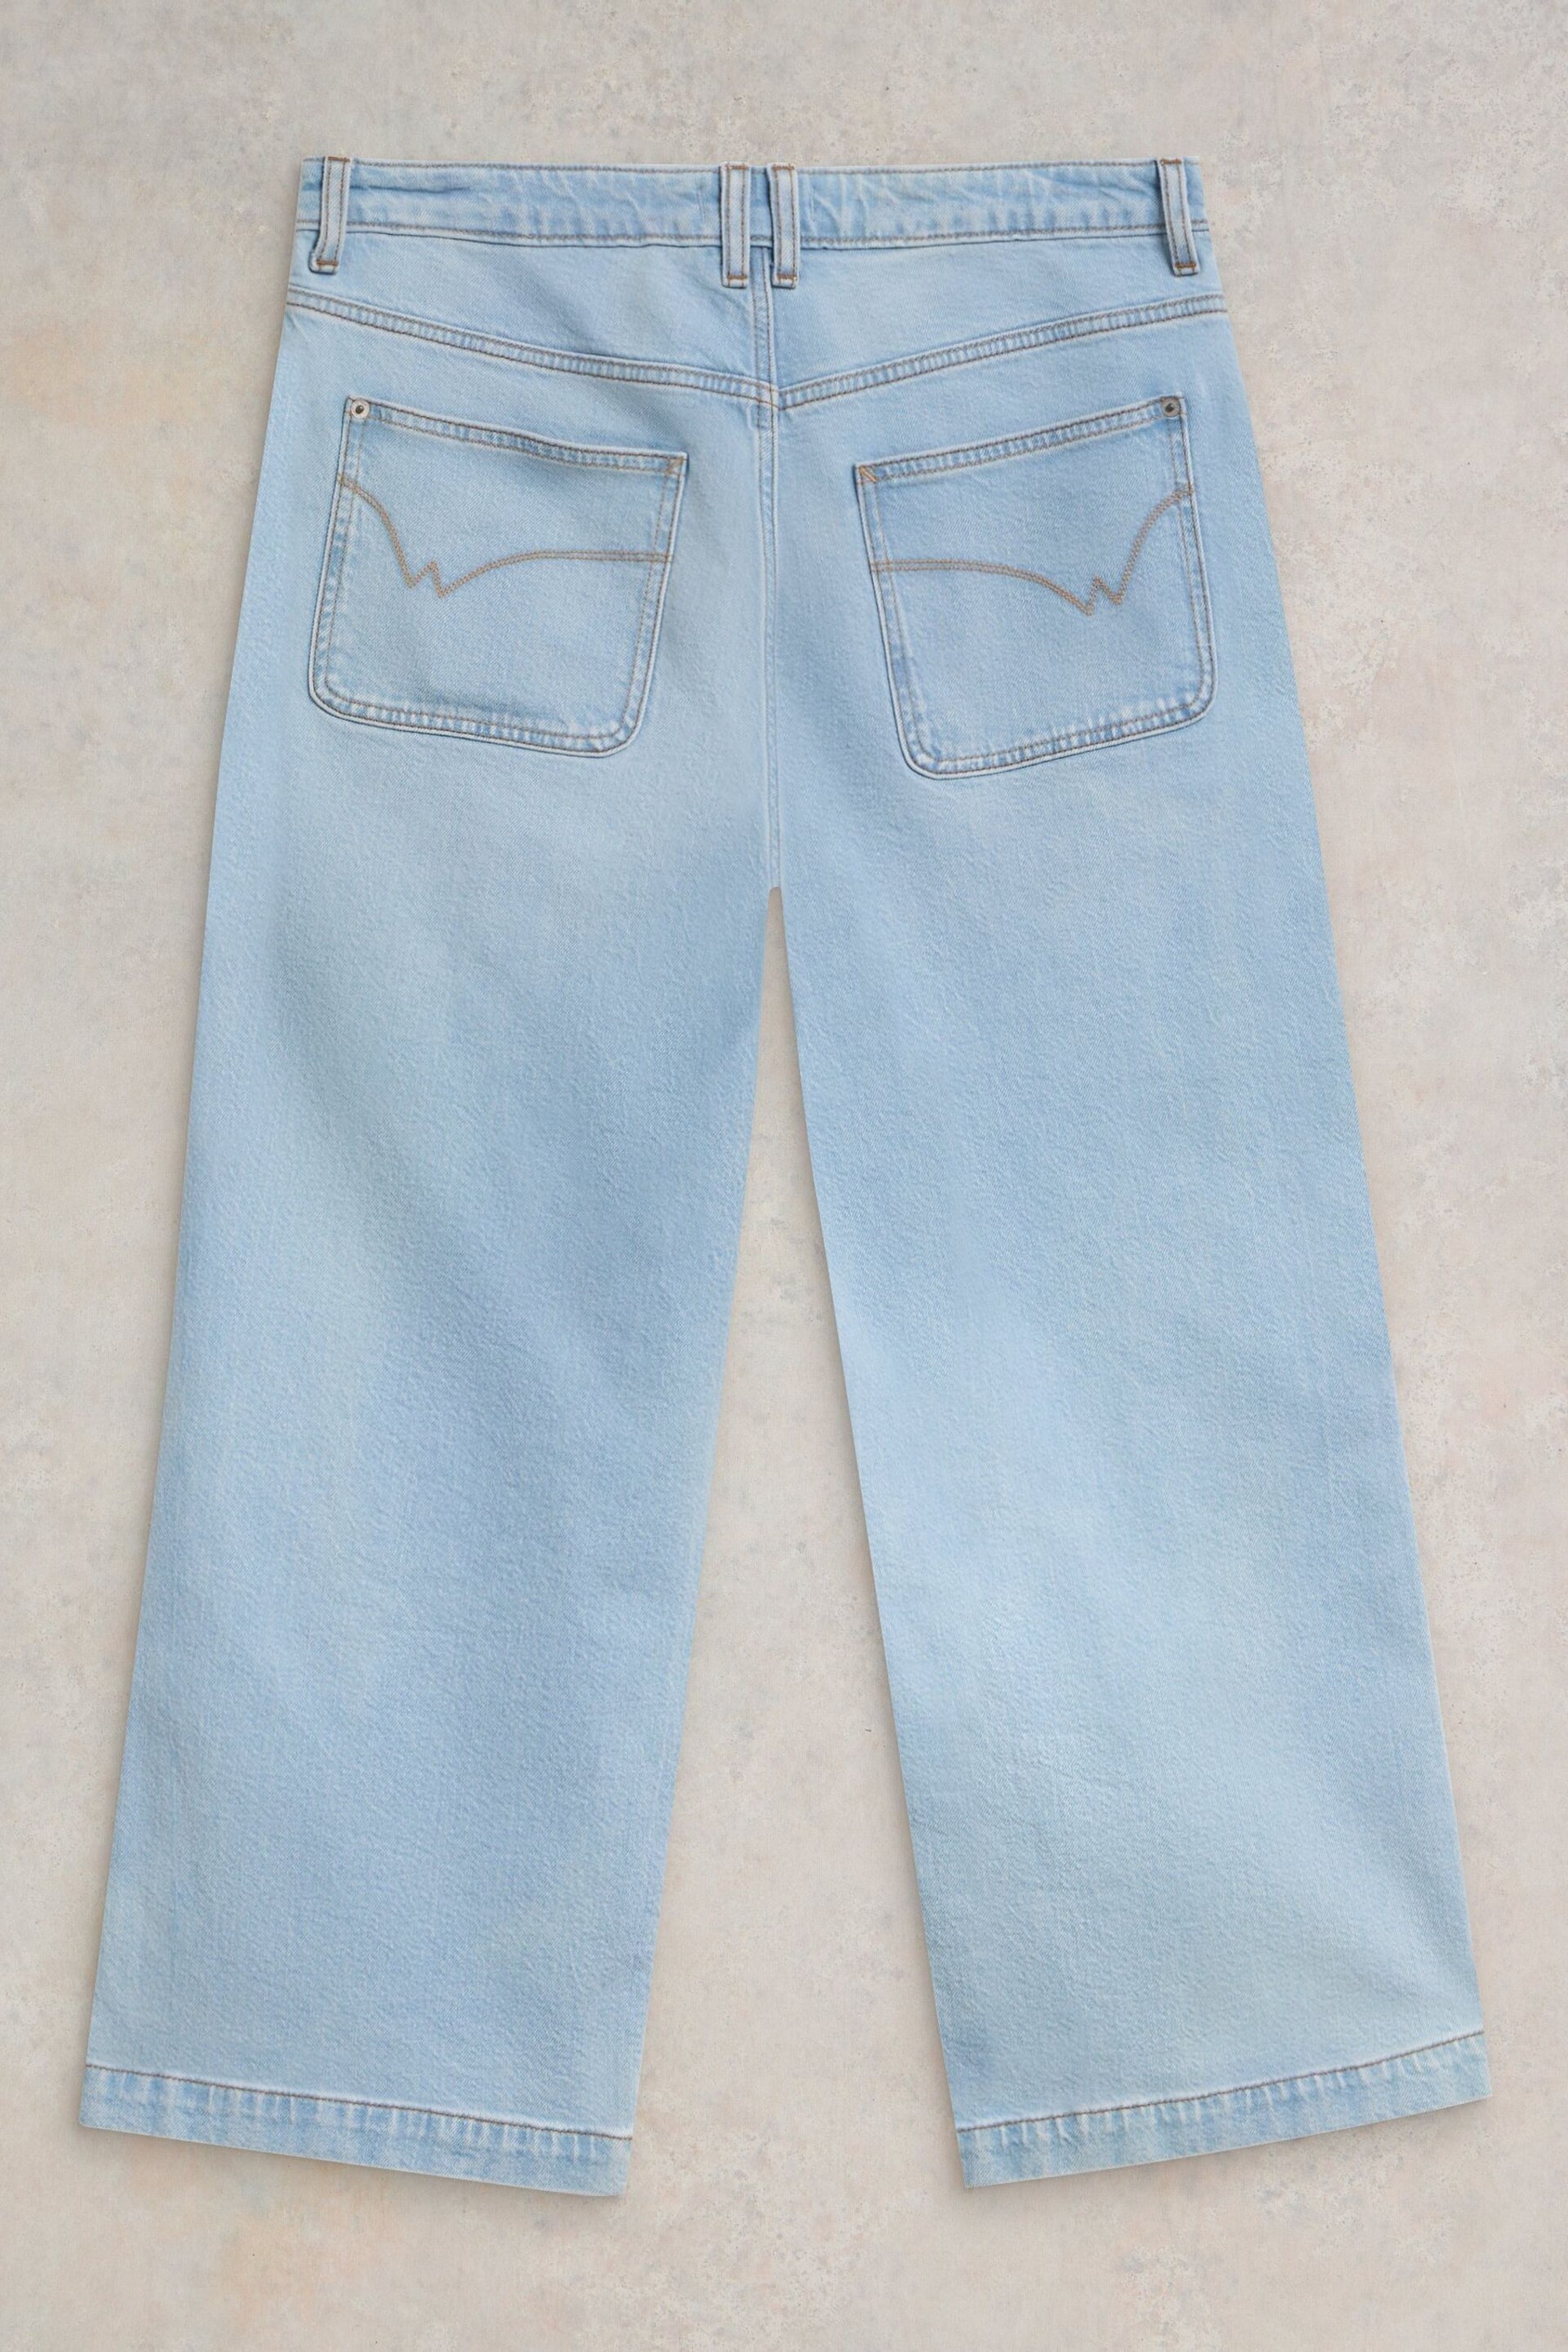 White Stuff Blue Tia Wide Leg Crop Jeans - Image 6 of 7